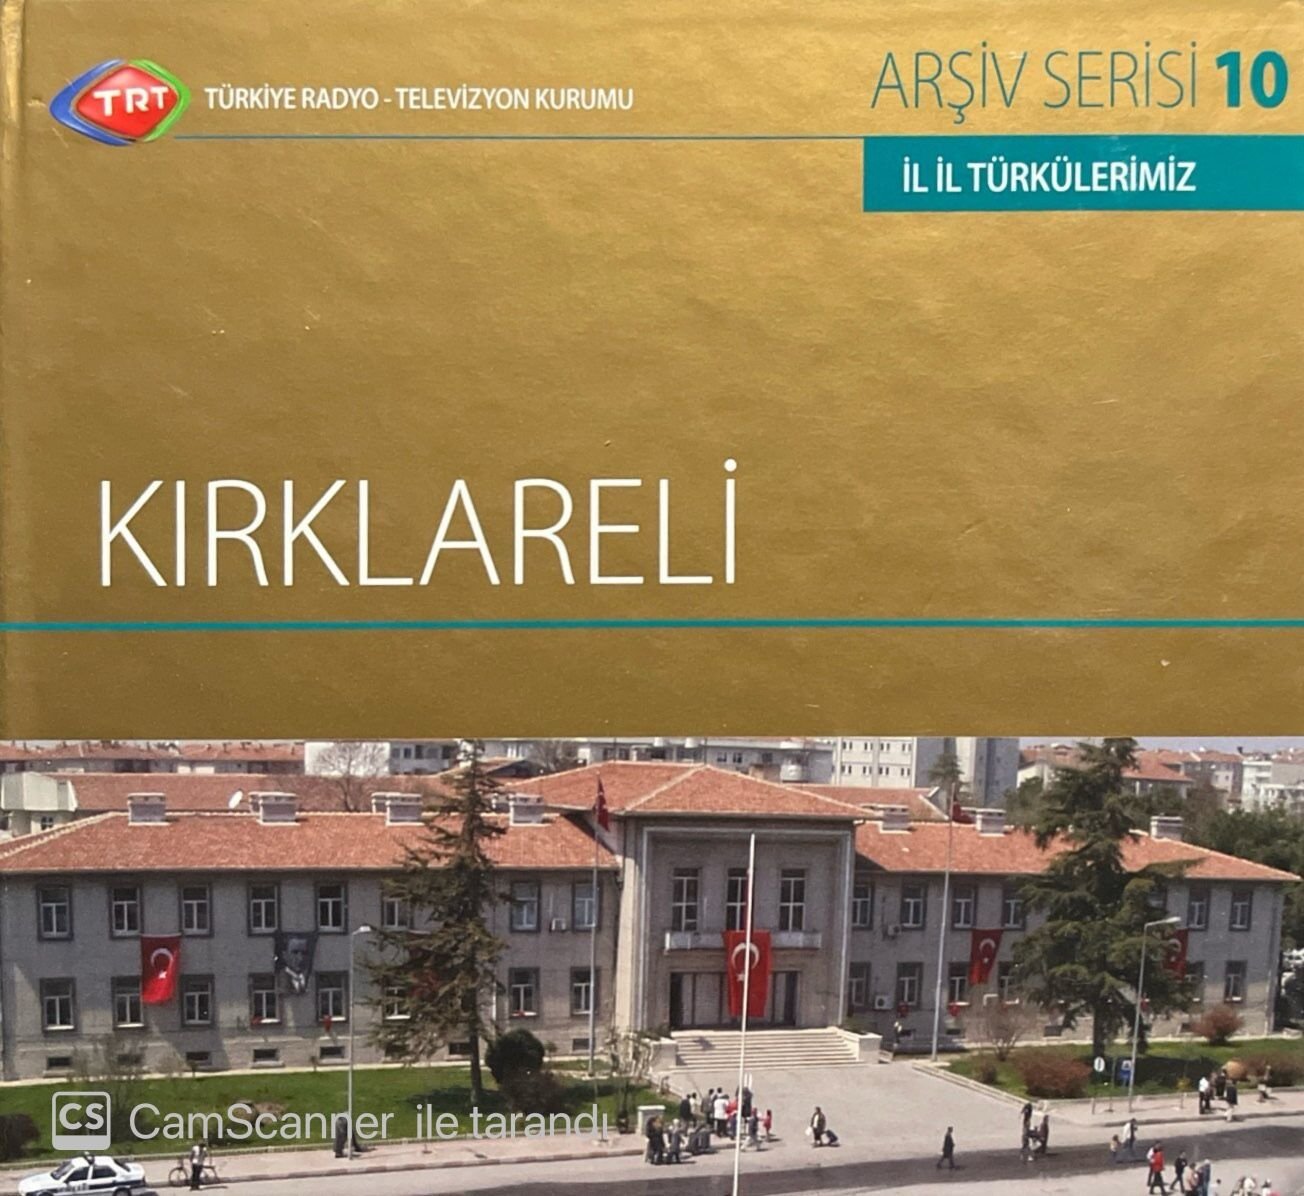 TRT Arşiv Serisi 10 İl İl Türkülerimiz Kırklareli CD